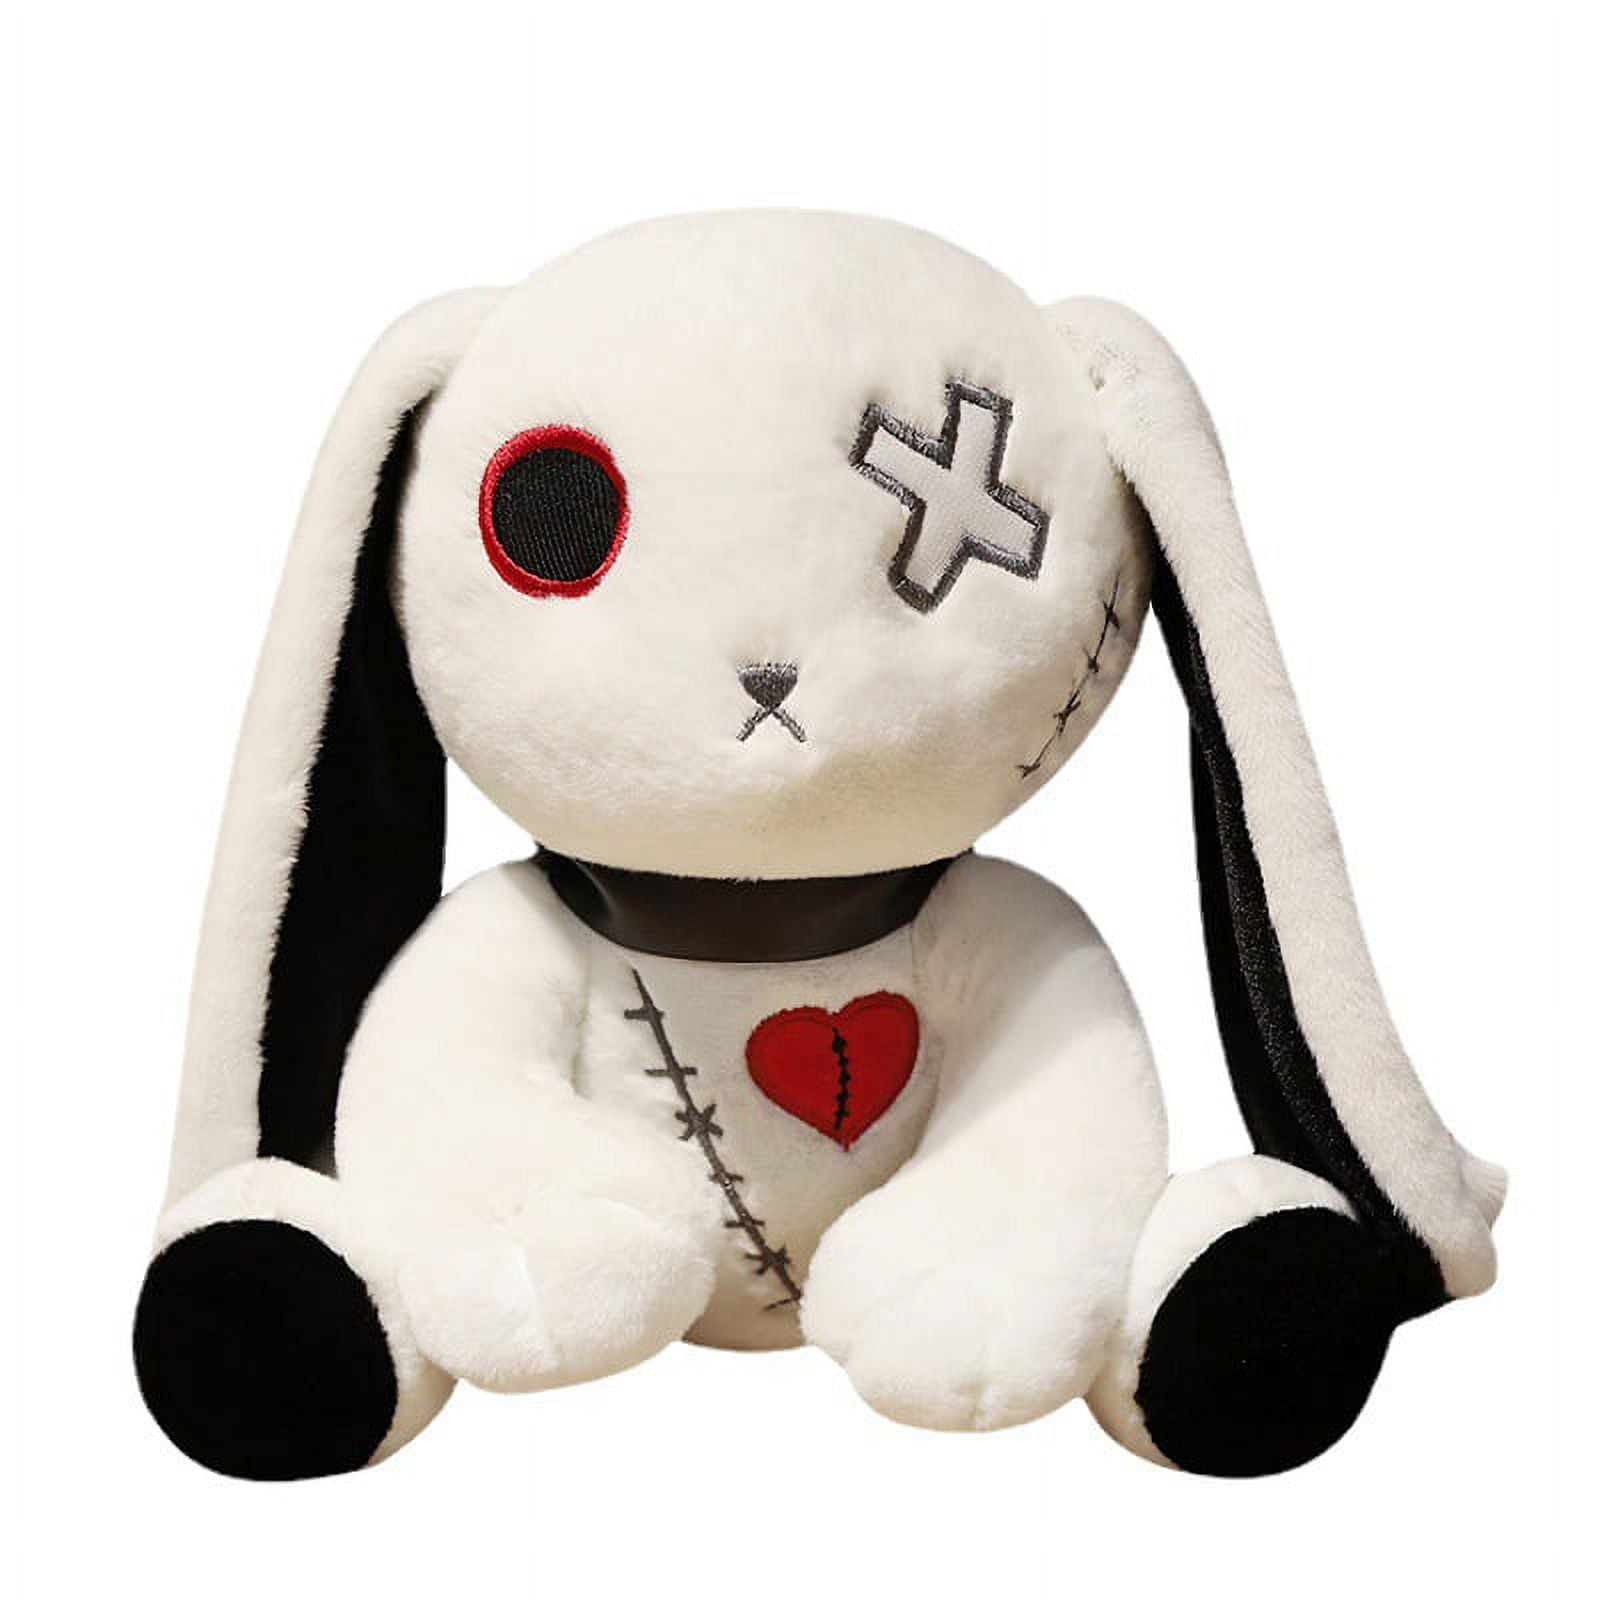 Handmade Creepy Plush Bunny Goth Doll Zombie Plush Toy 